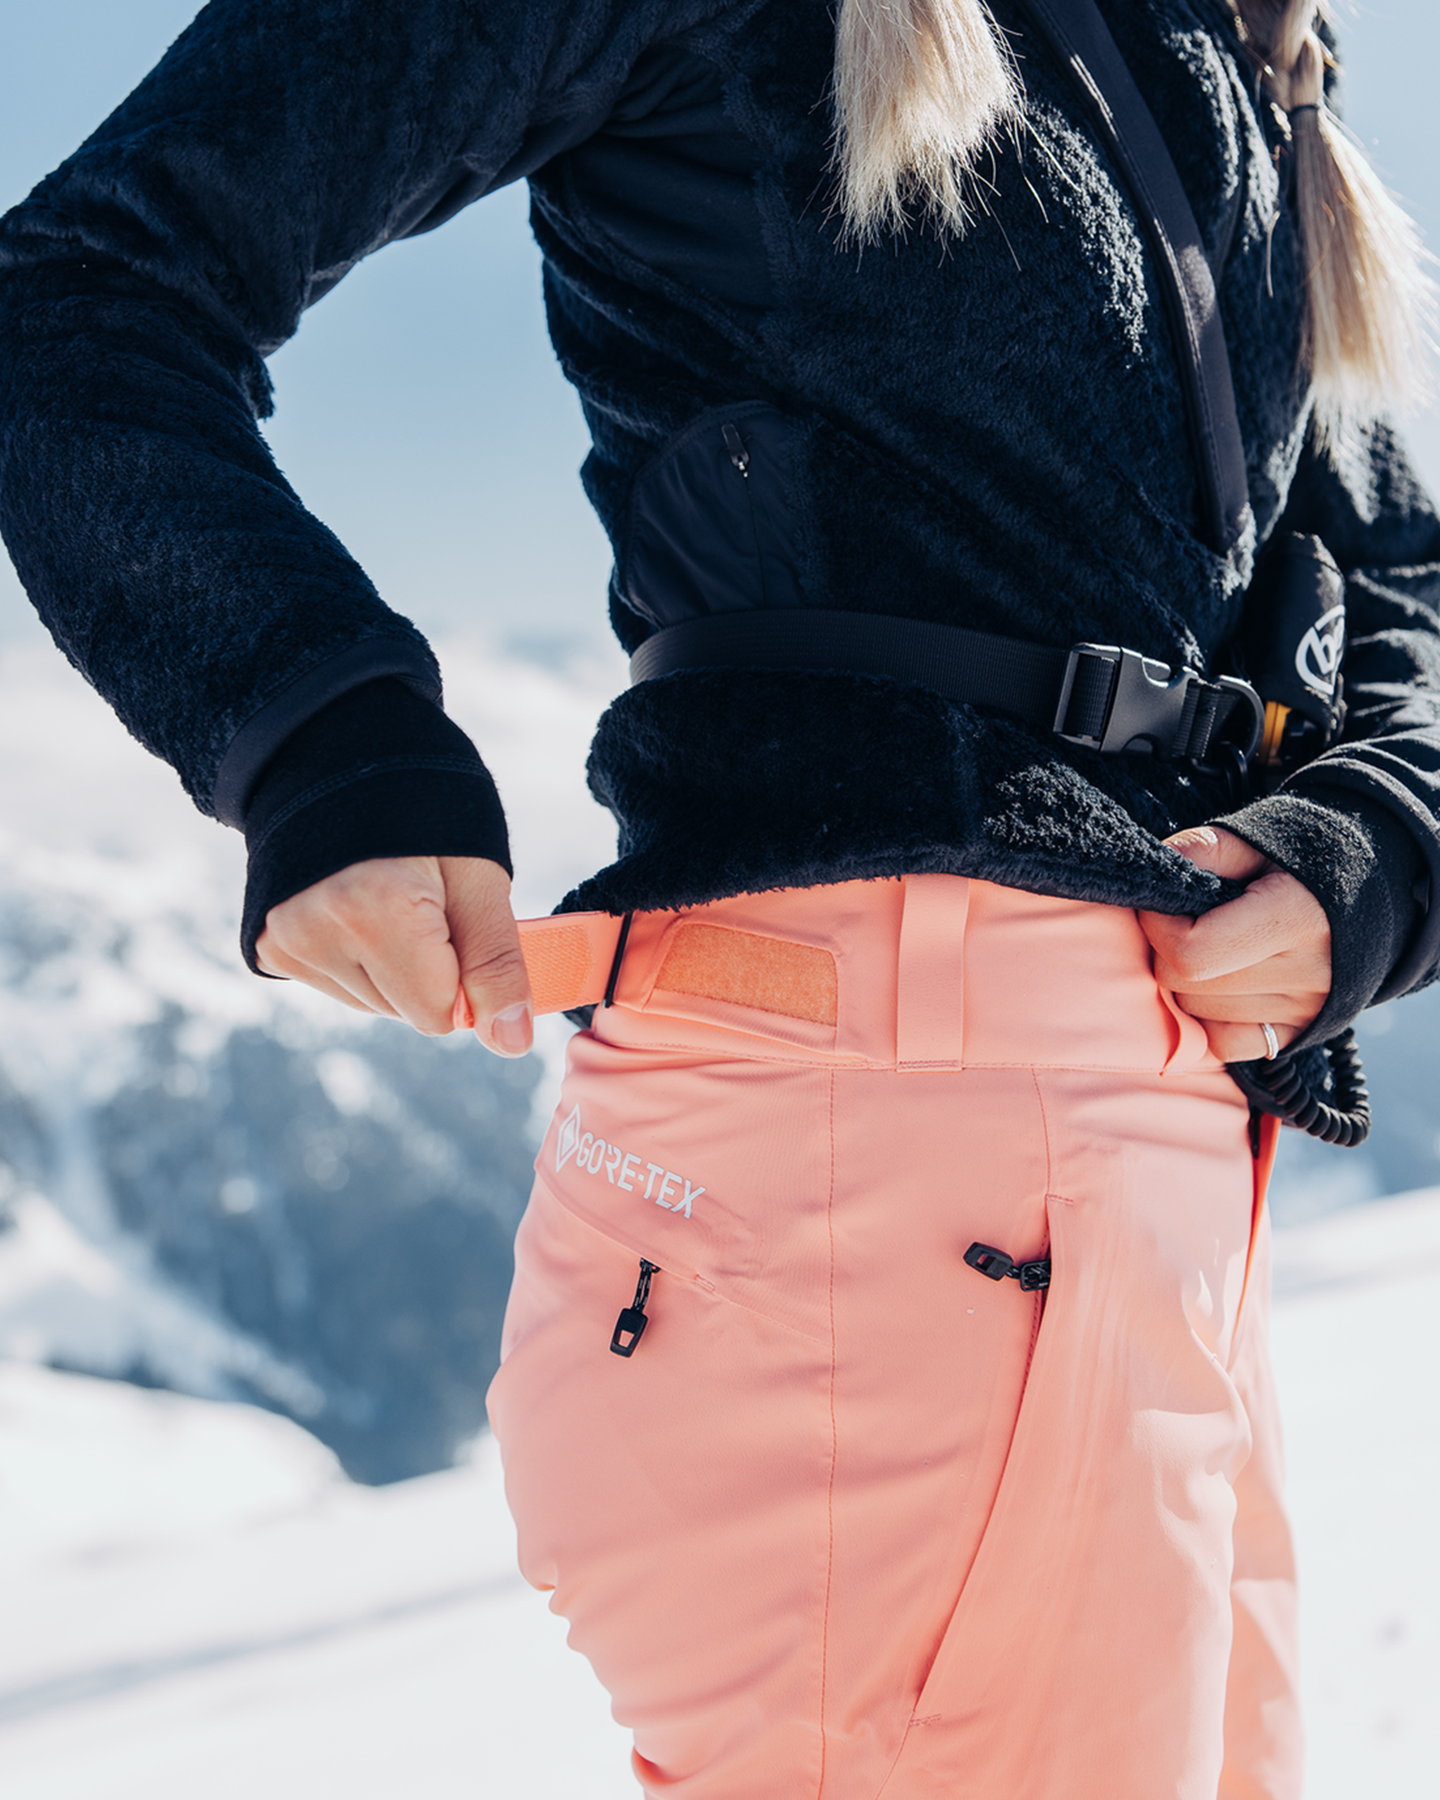 Burton Women's [ak]® Summit Gore‑Tex Insulated 2L Snow Pants - Reef Pink Women's Snow Pants - SnowSkiersWarehouse